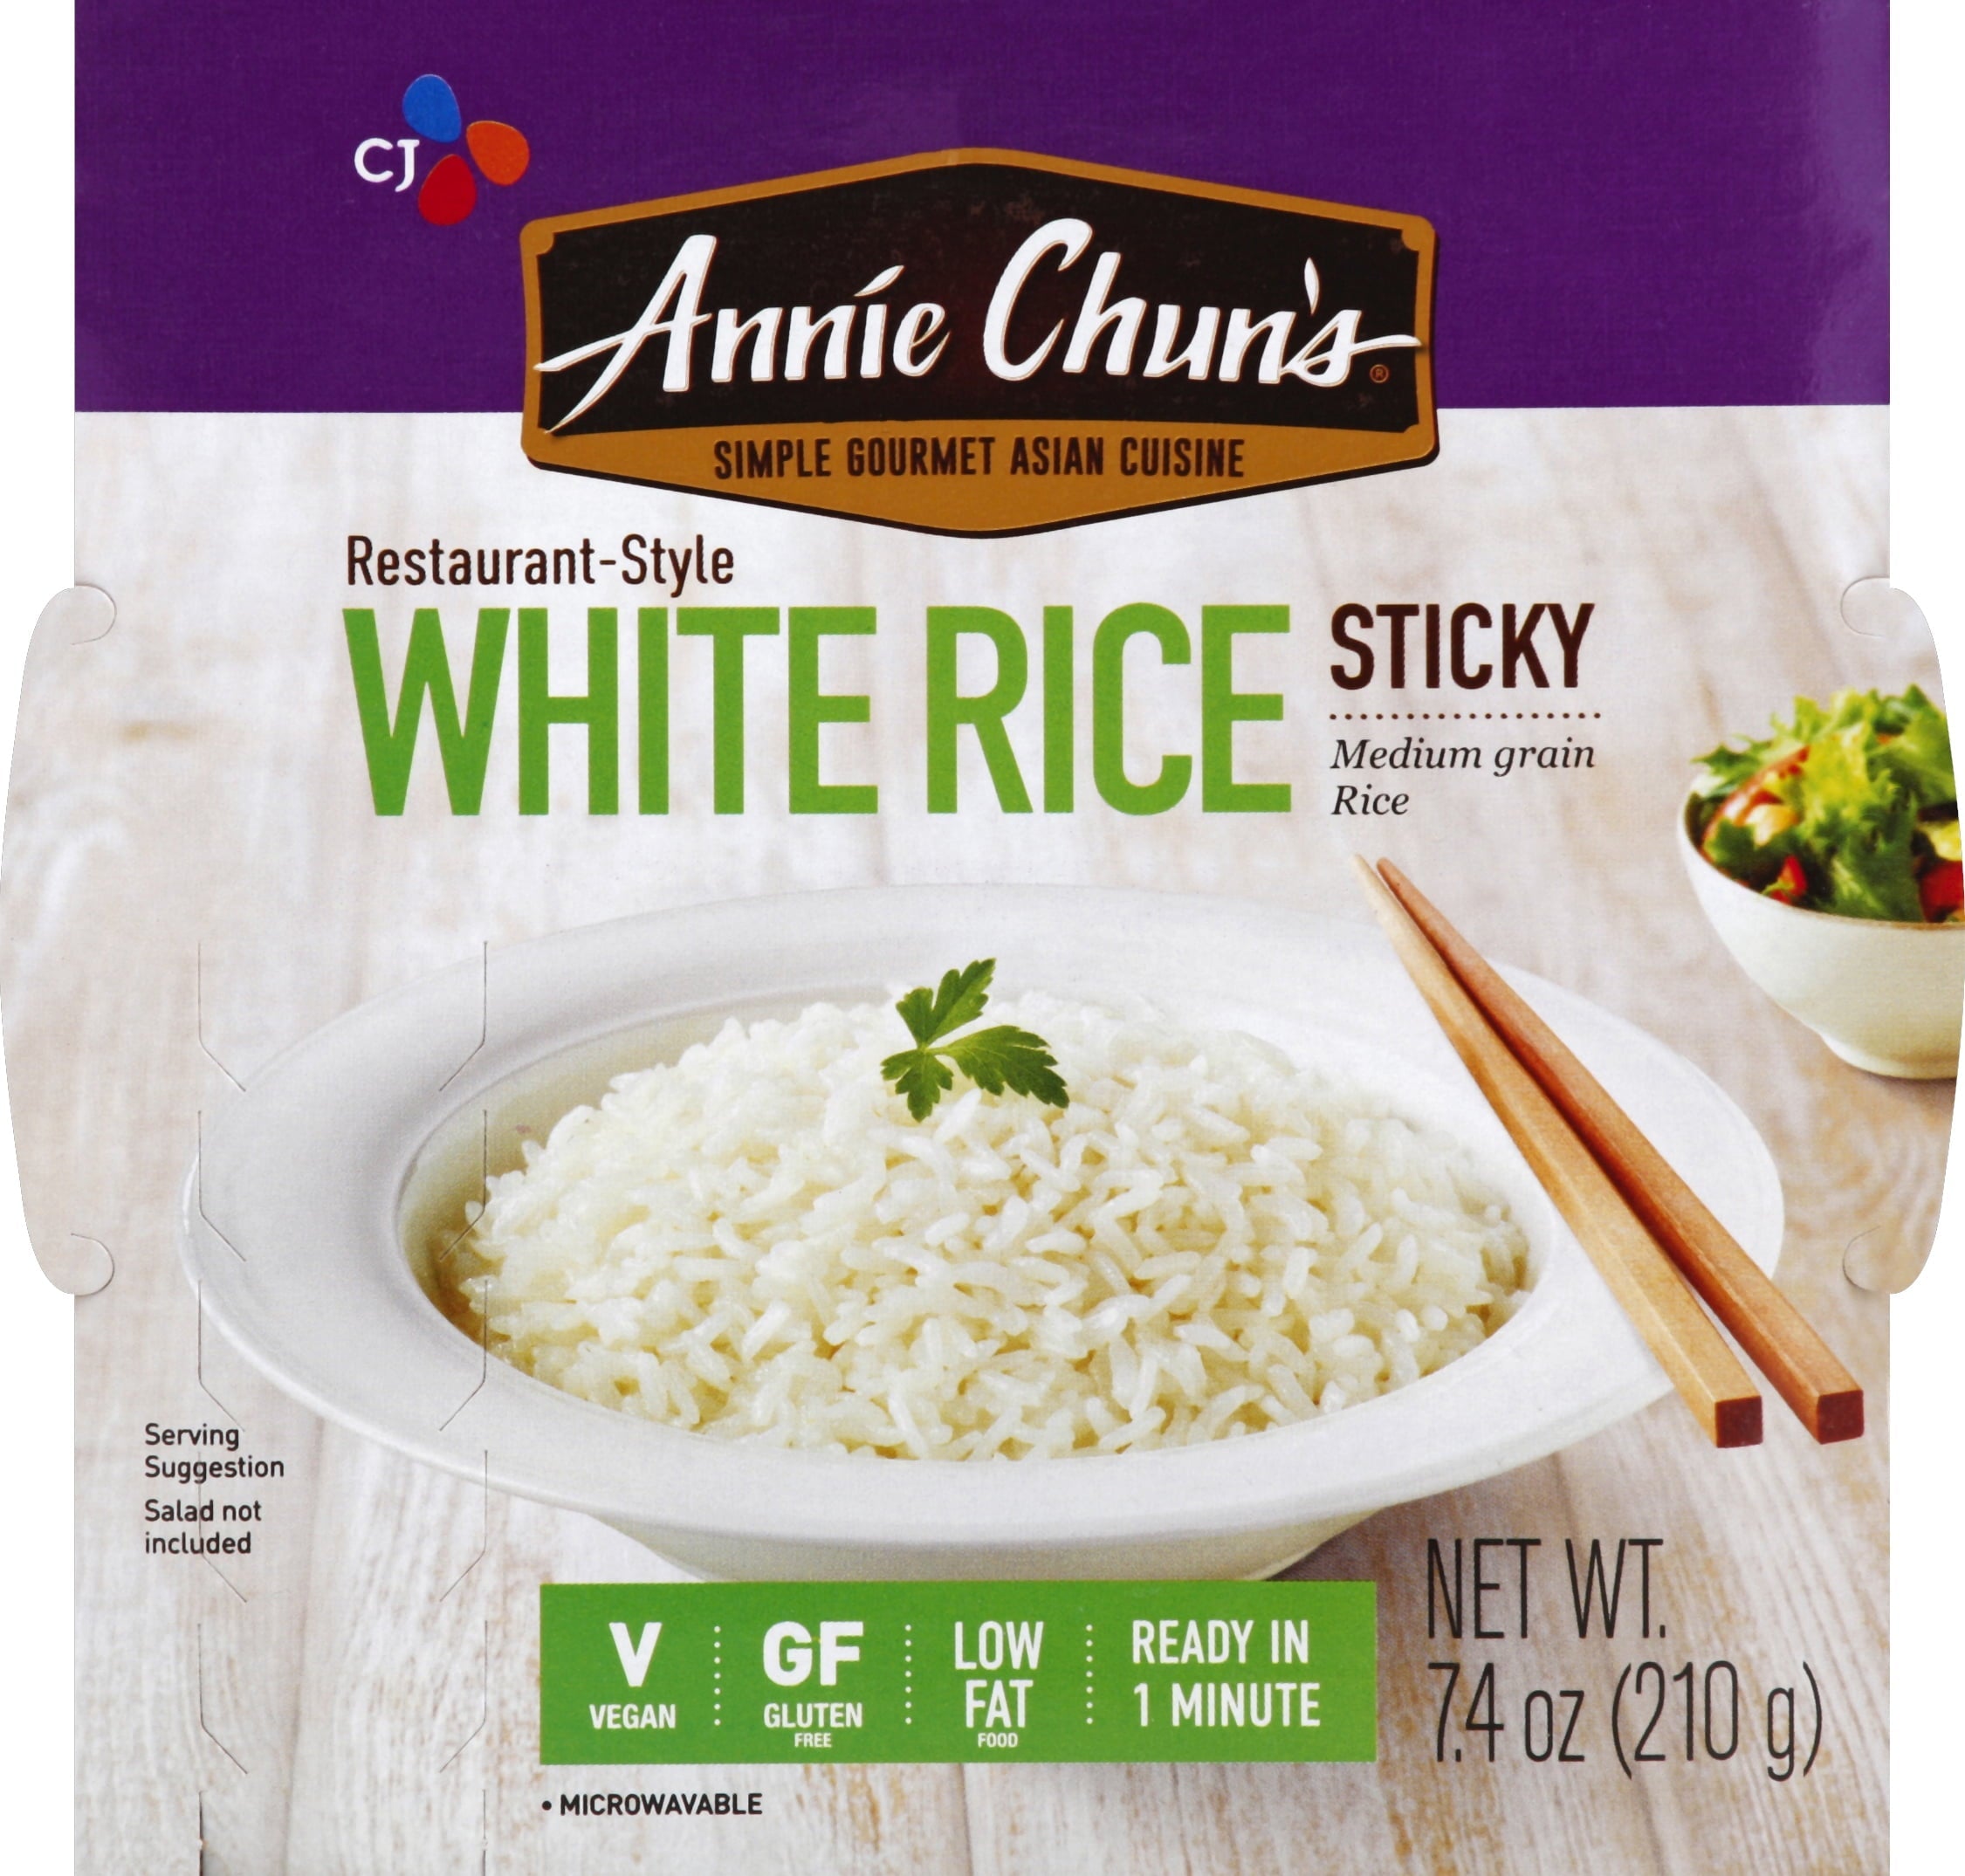 Annie Chun's Rice Express, White Sticky Rice, 7.4 oz Bag